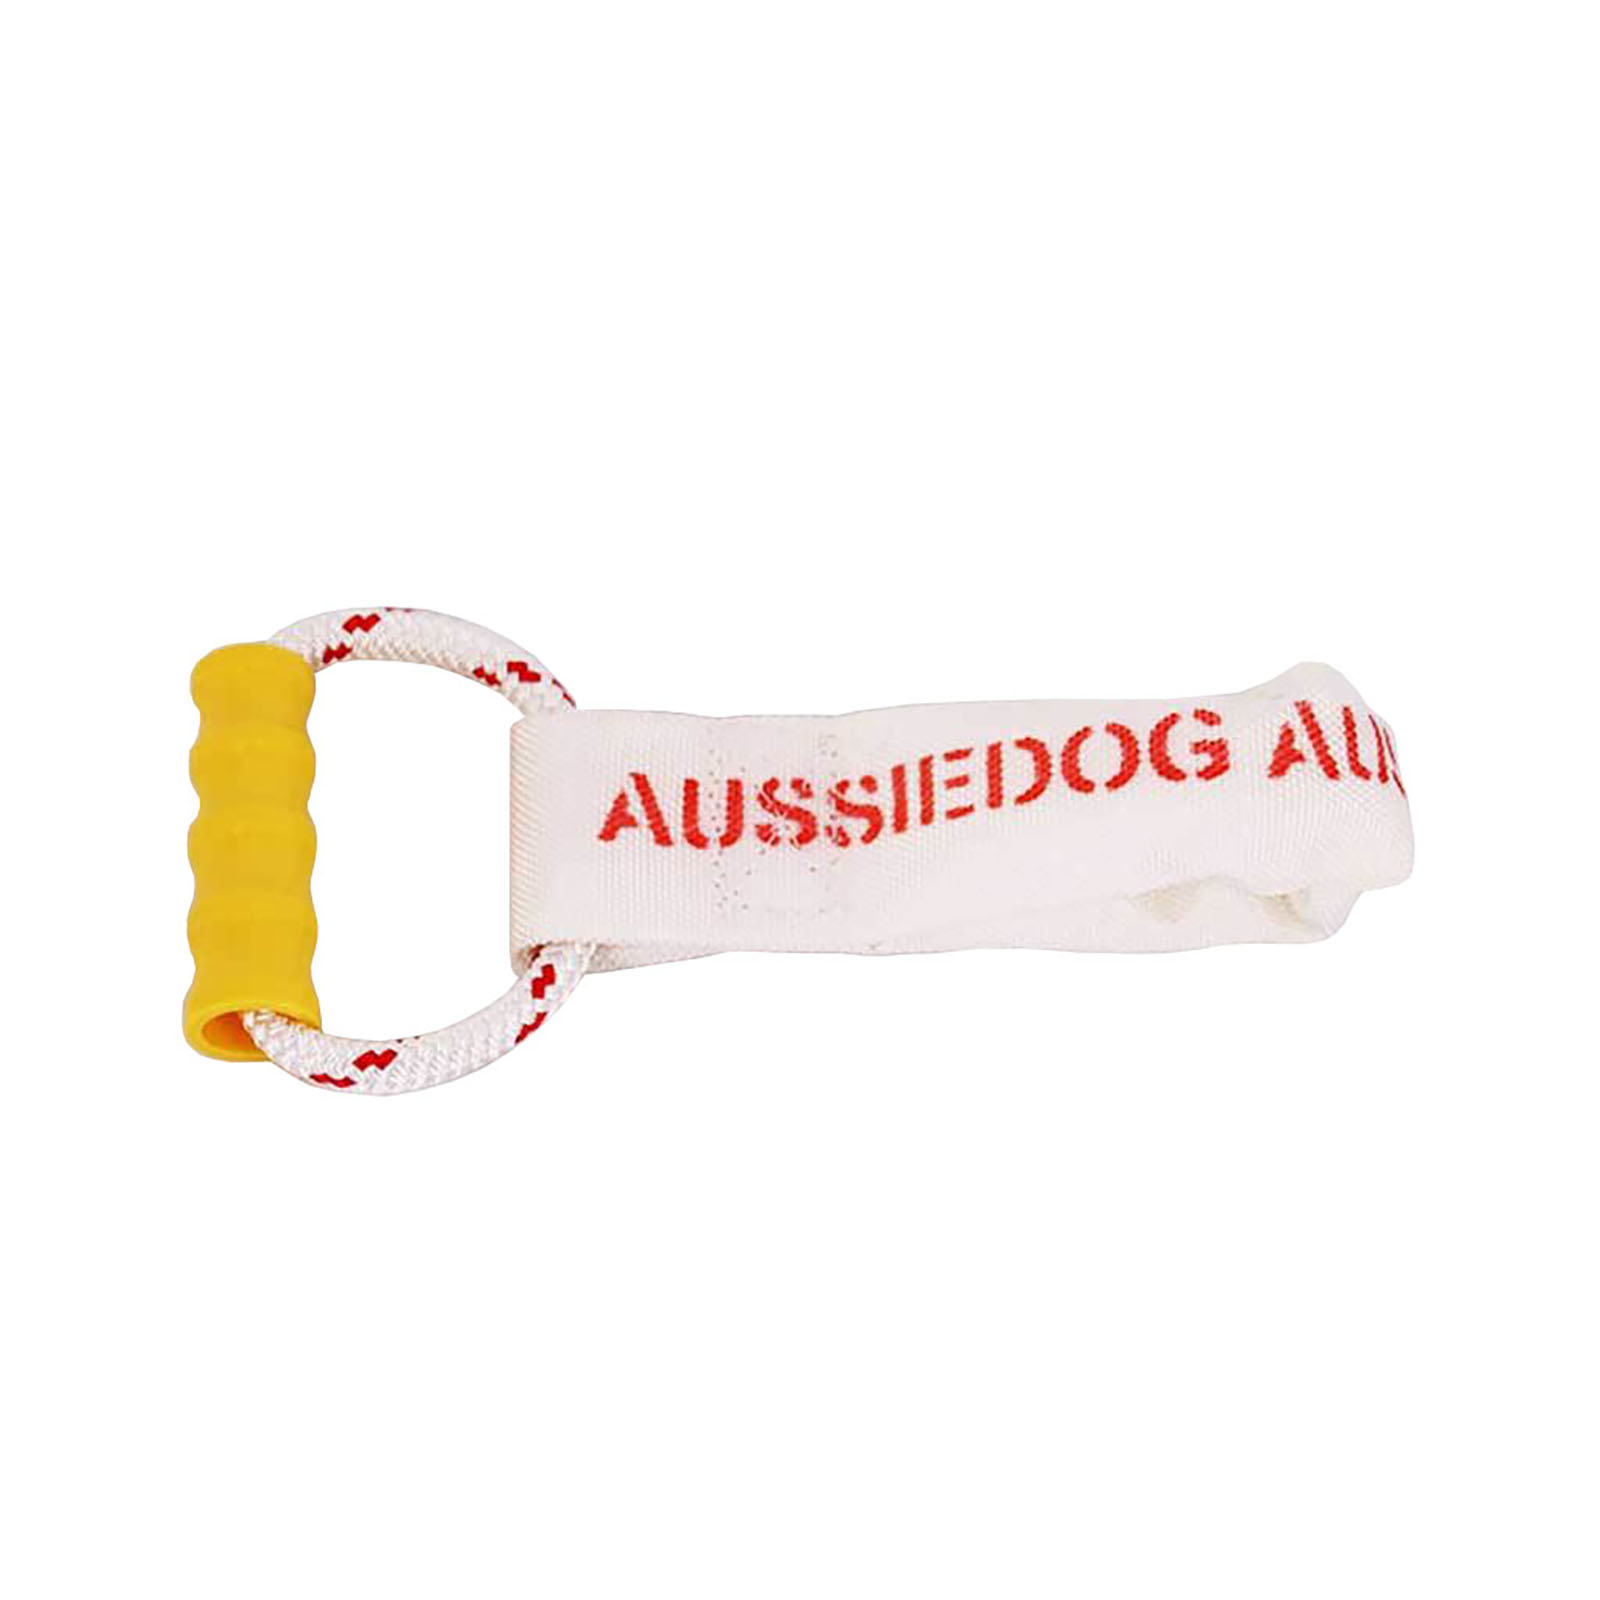 Aussie Dog Tugathong Tough Tug Dog Toy for Large Dogs over 30kg image 0